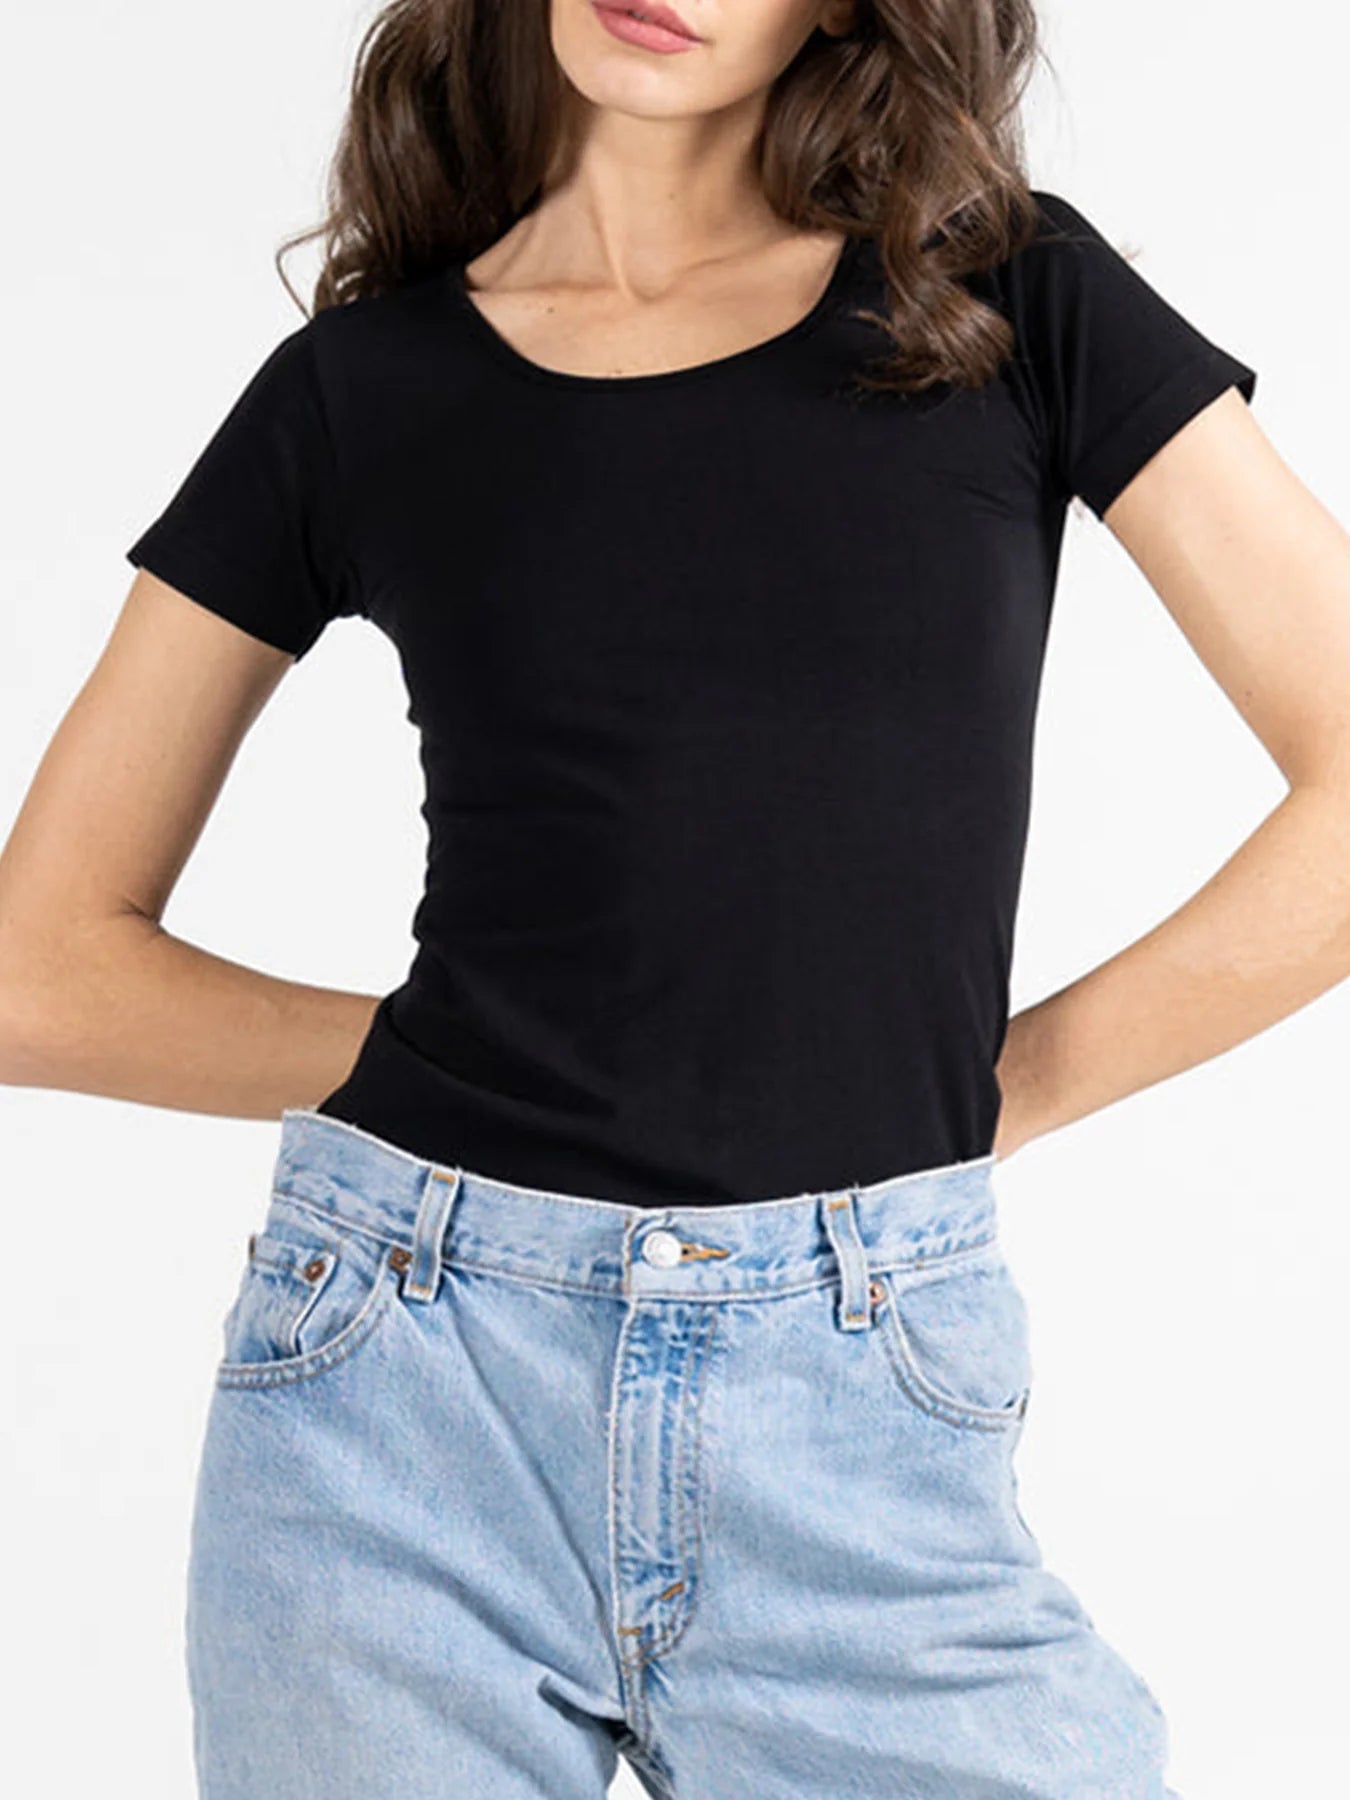 Buy Toplook Women Seamless Workout Outfits Athletic Set Leggings + Long  Sleeve Top (Black, Medium) at